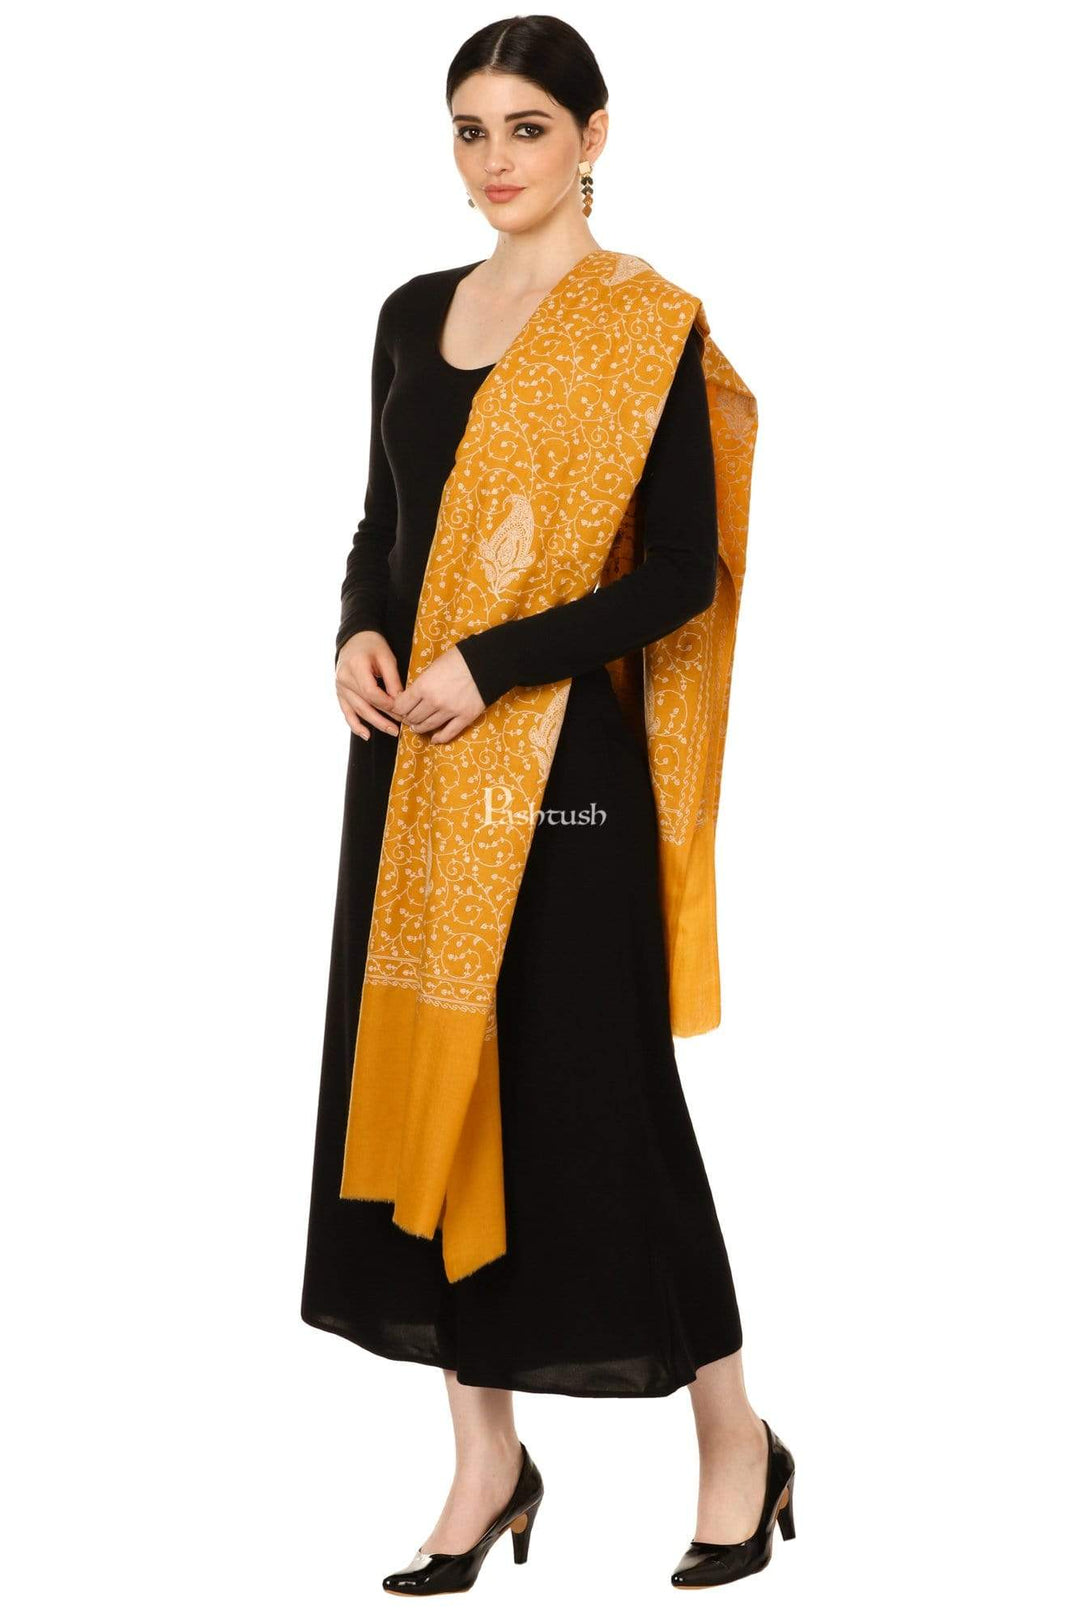 Pashtush Shawl Store Shawl Pashtush Womens Shawl, Tone on Tone Embroidery, Soft, Warm, Light Weight, Kashmiri Mustard